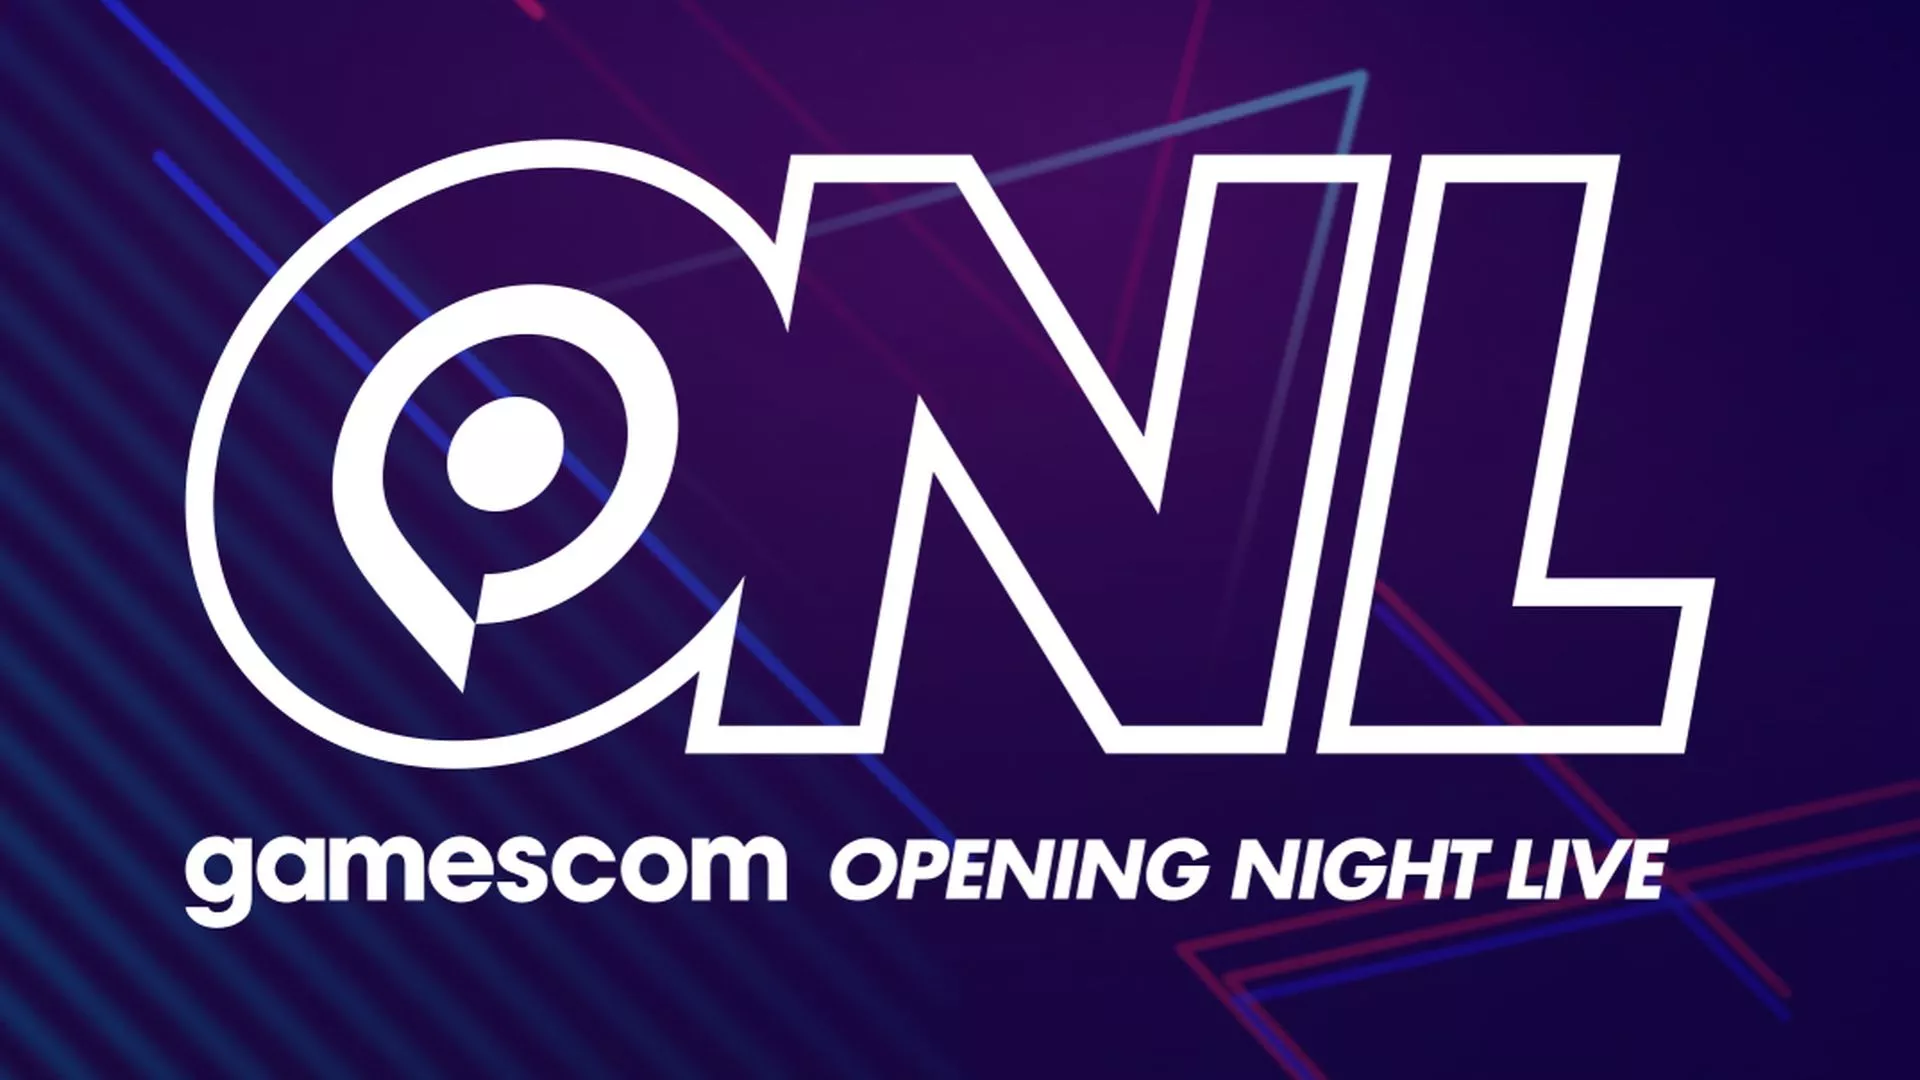 Gamescom Opening Night Live mit über 30 Spielen Heropic